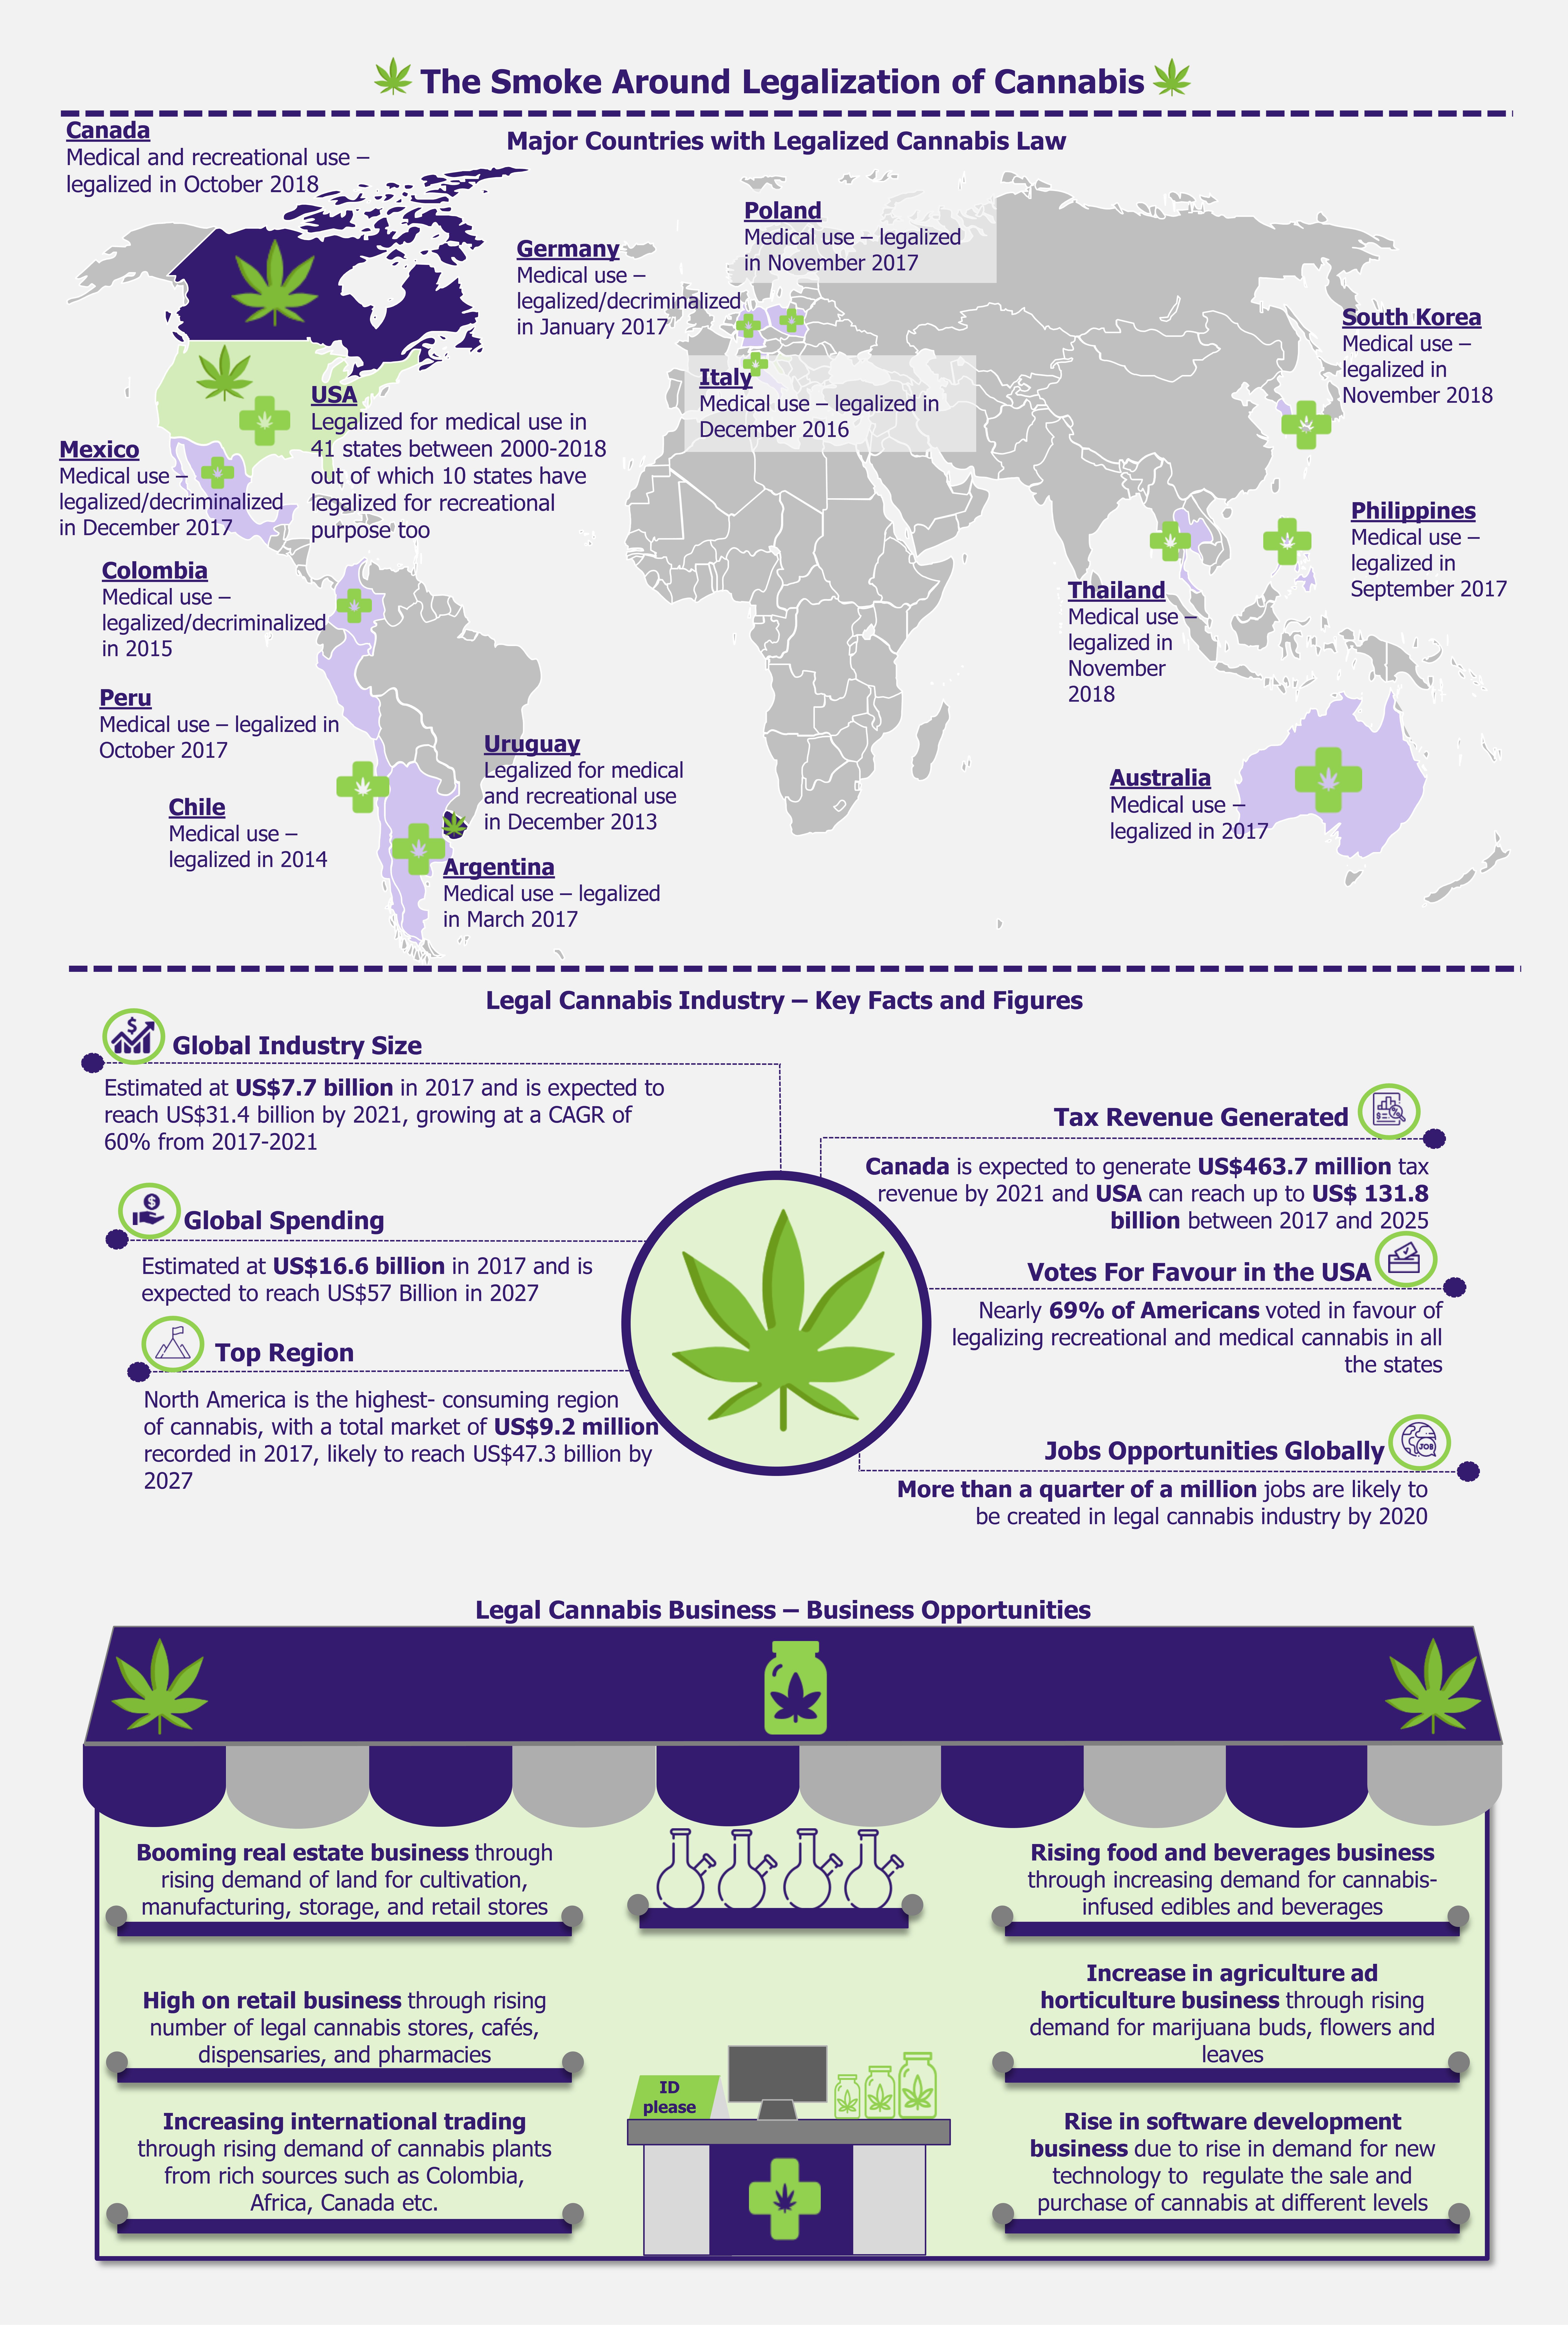 The Smoke around Legal Cannabis